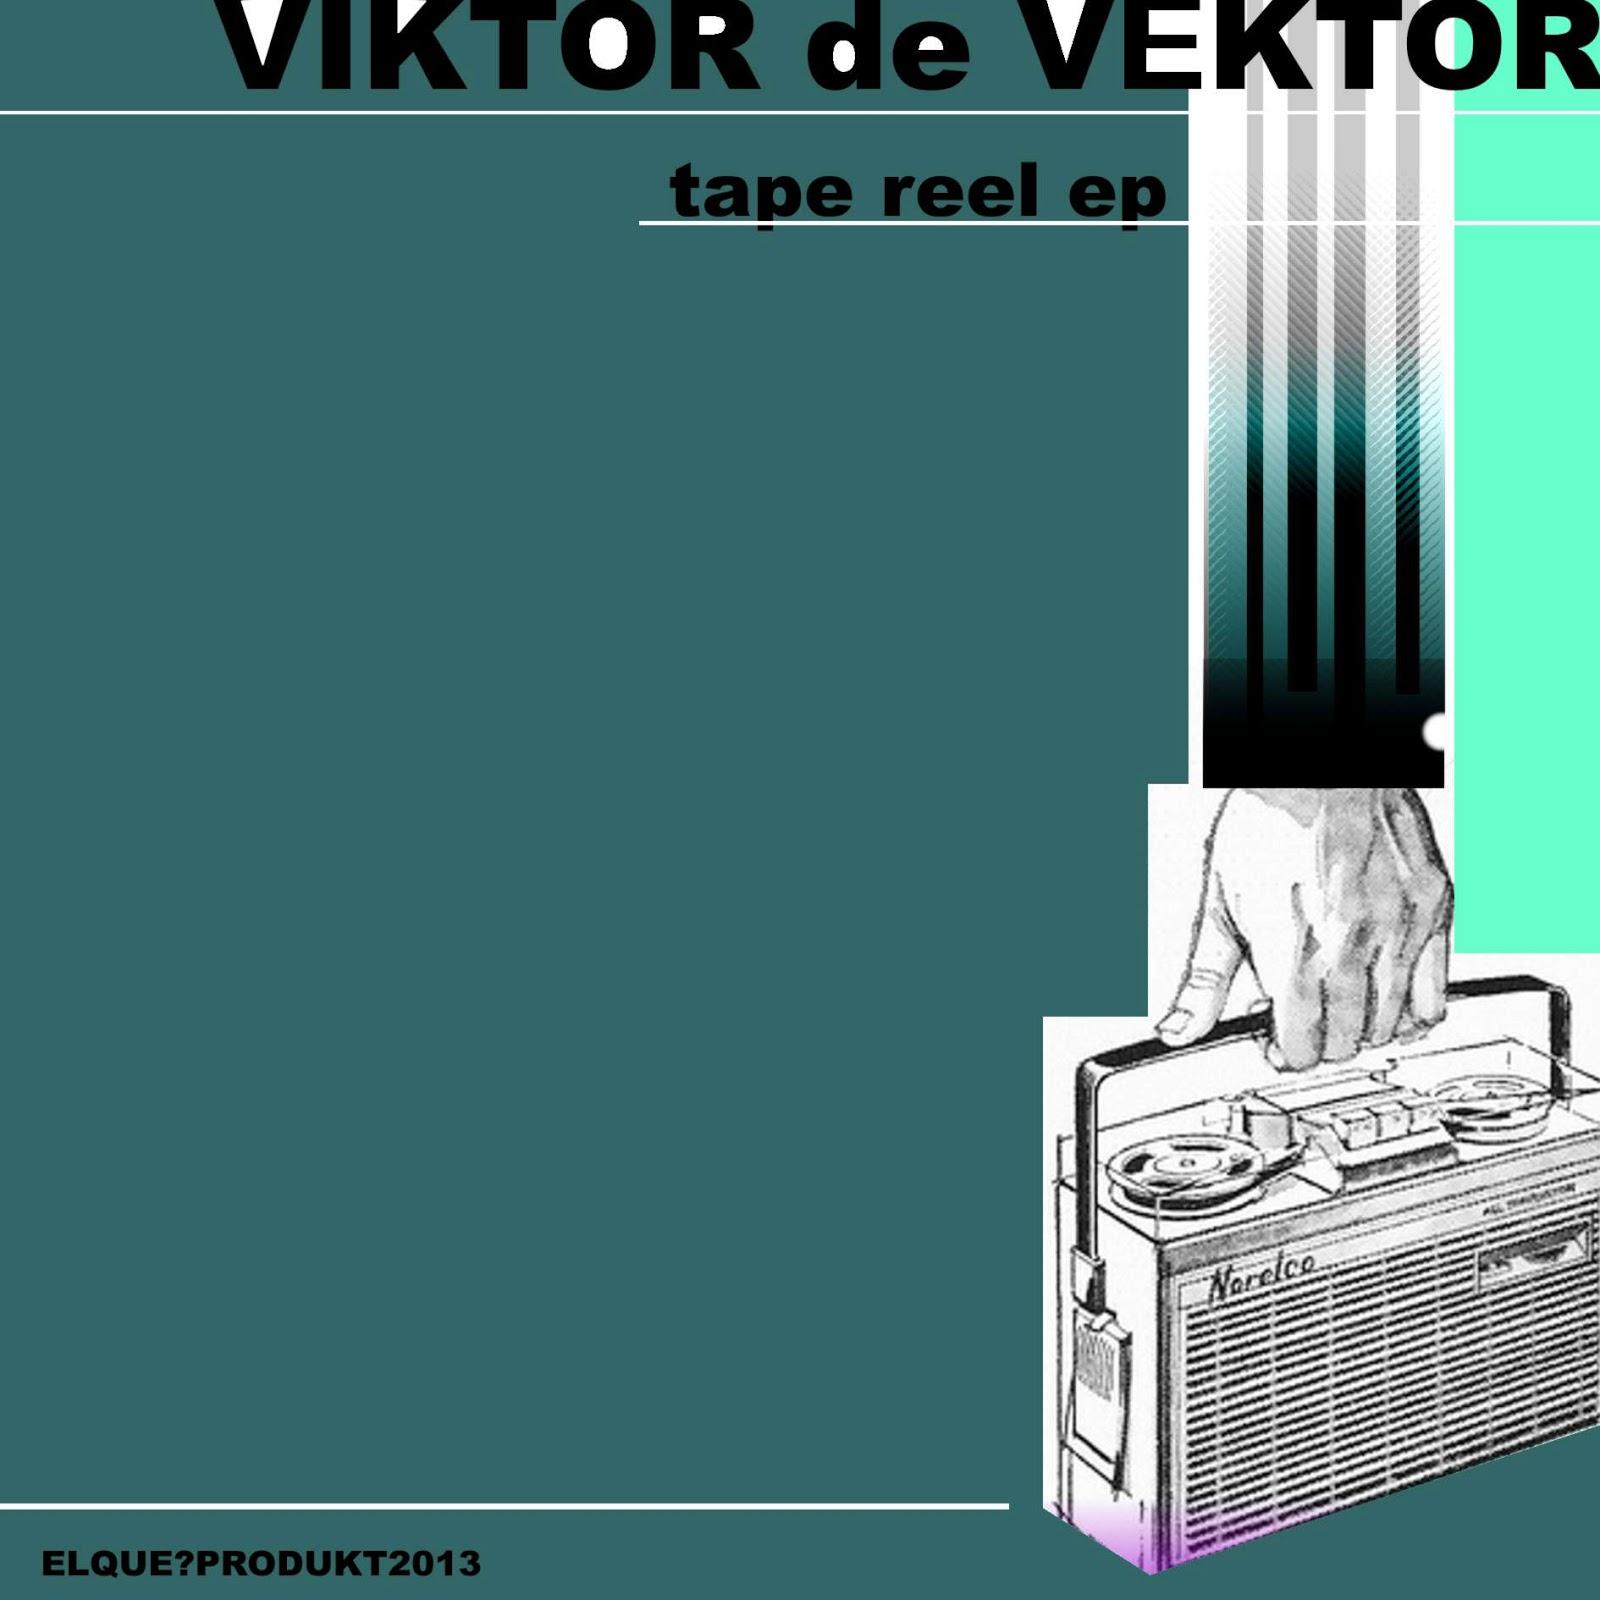 VIKTOR DE VEKTOR -  TAPE REEL EP